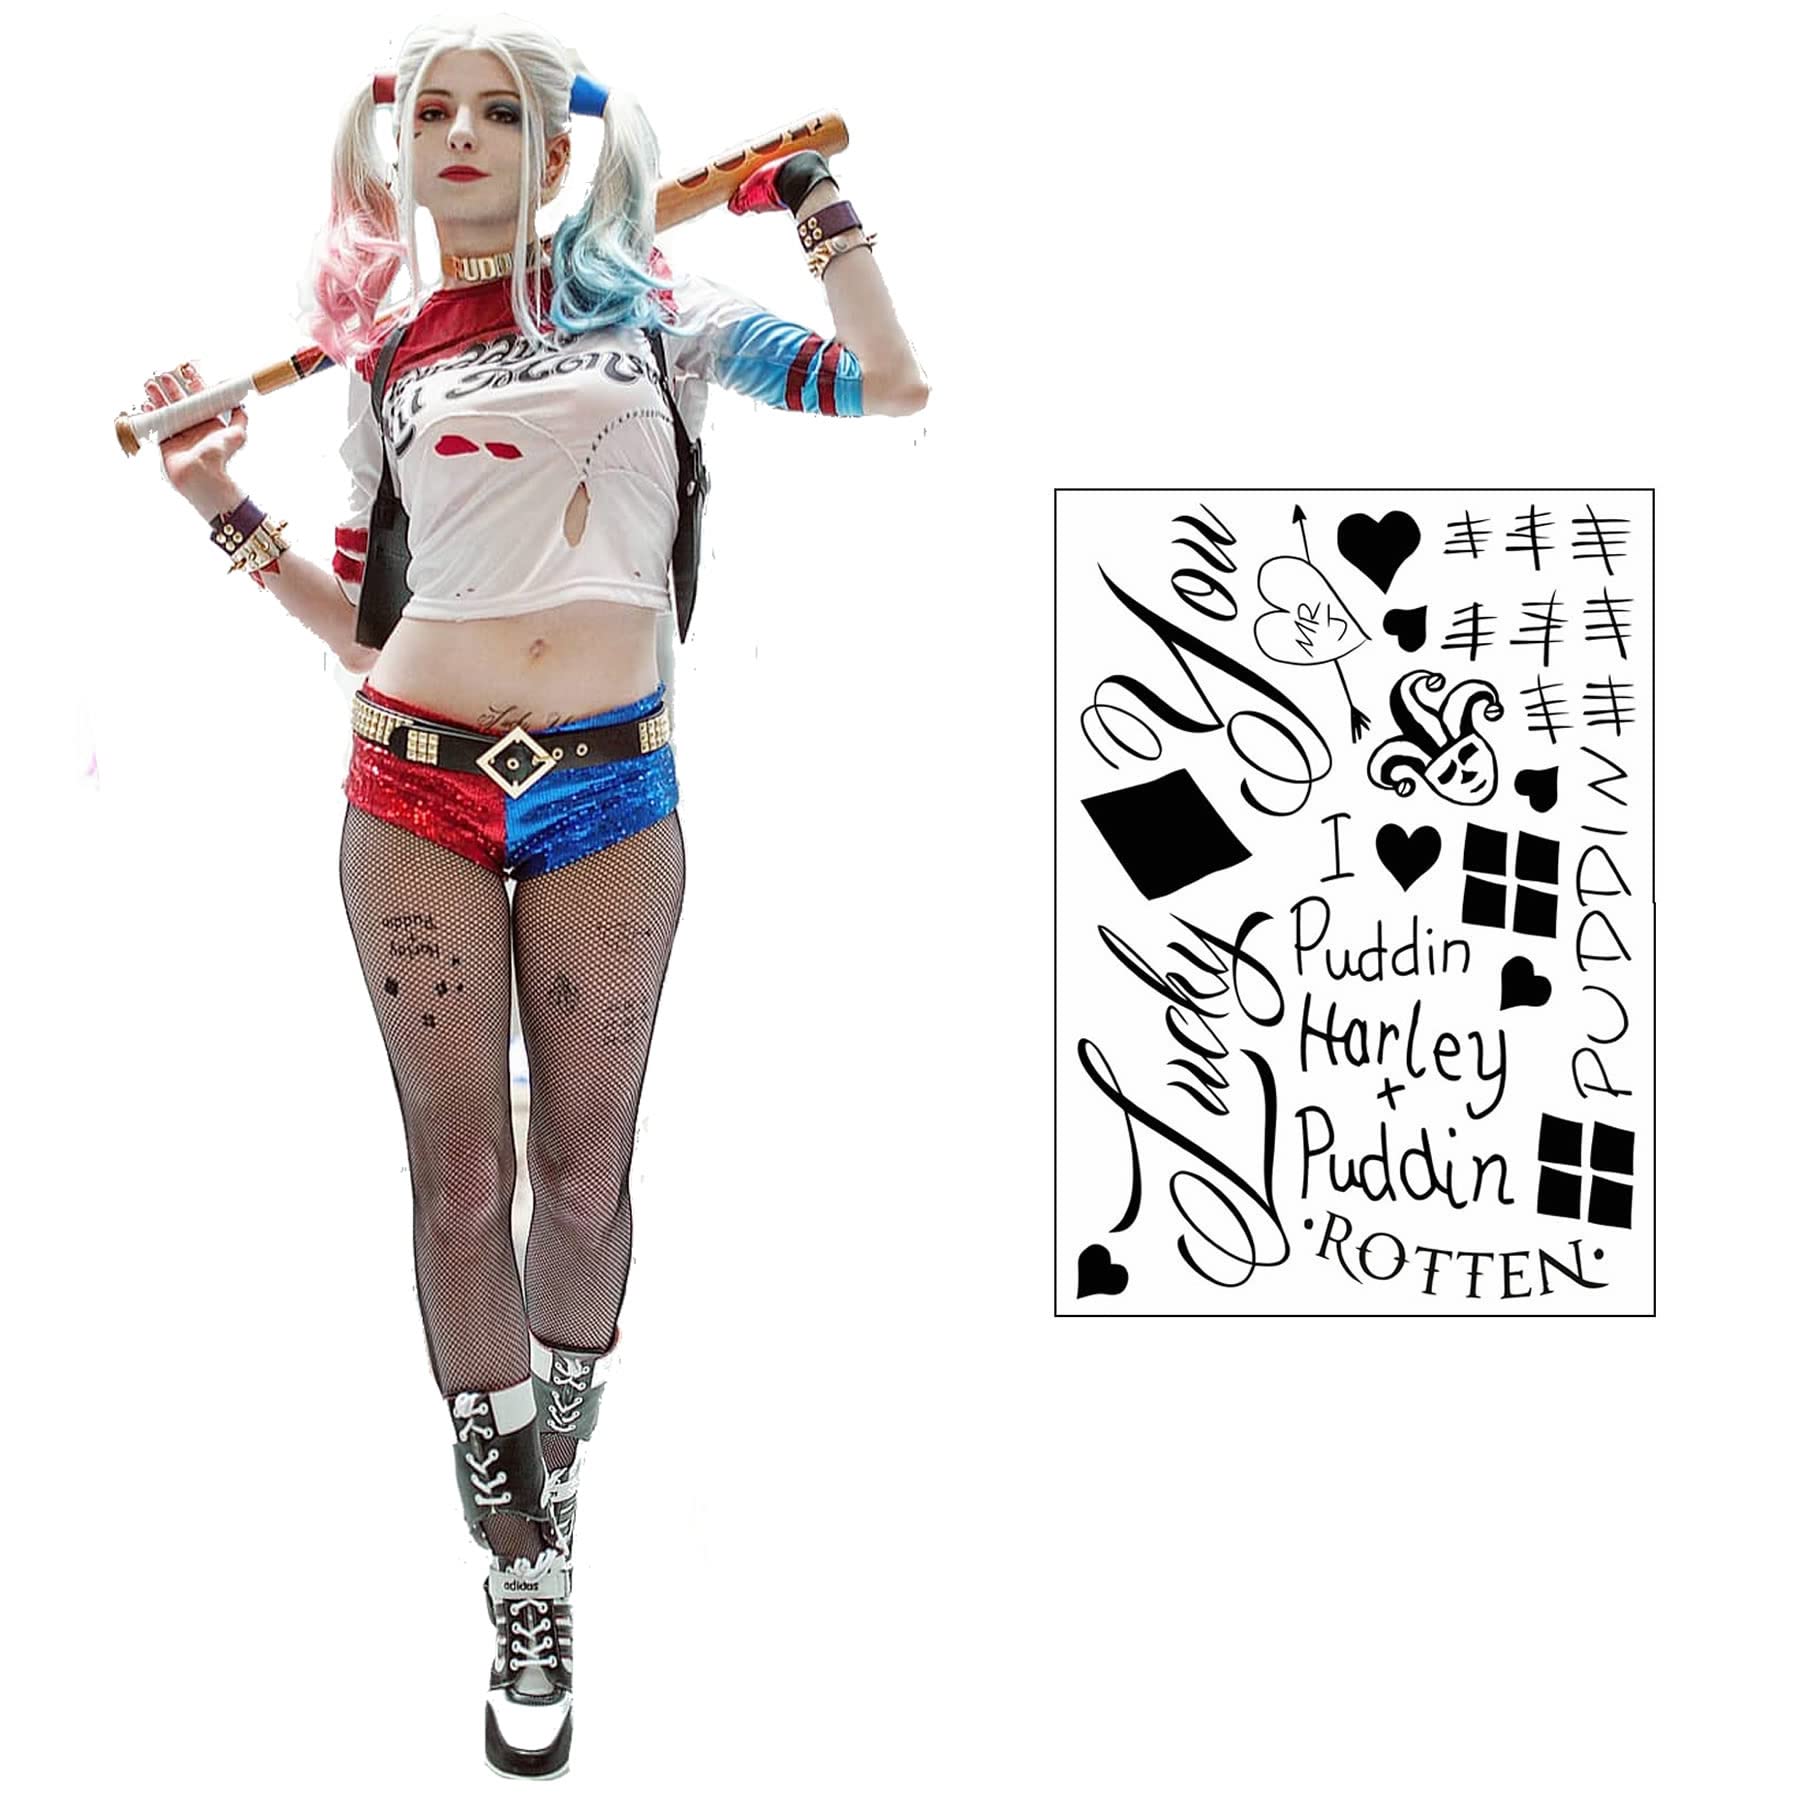 HQ Professional Temporary Tattoos Sheet - Face, Waist, & Leg Tats - 16 Total - Costume / Cosplay